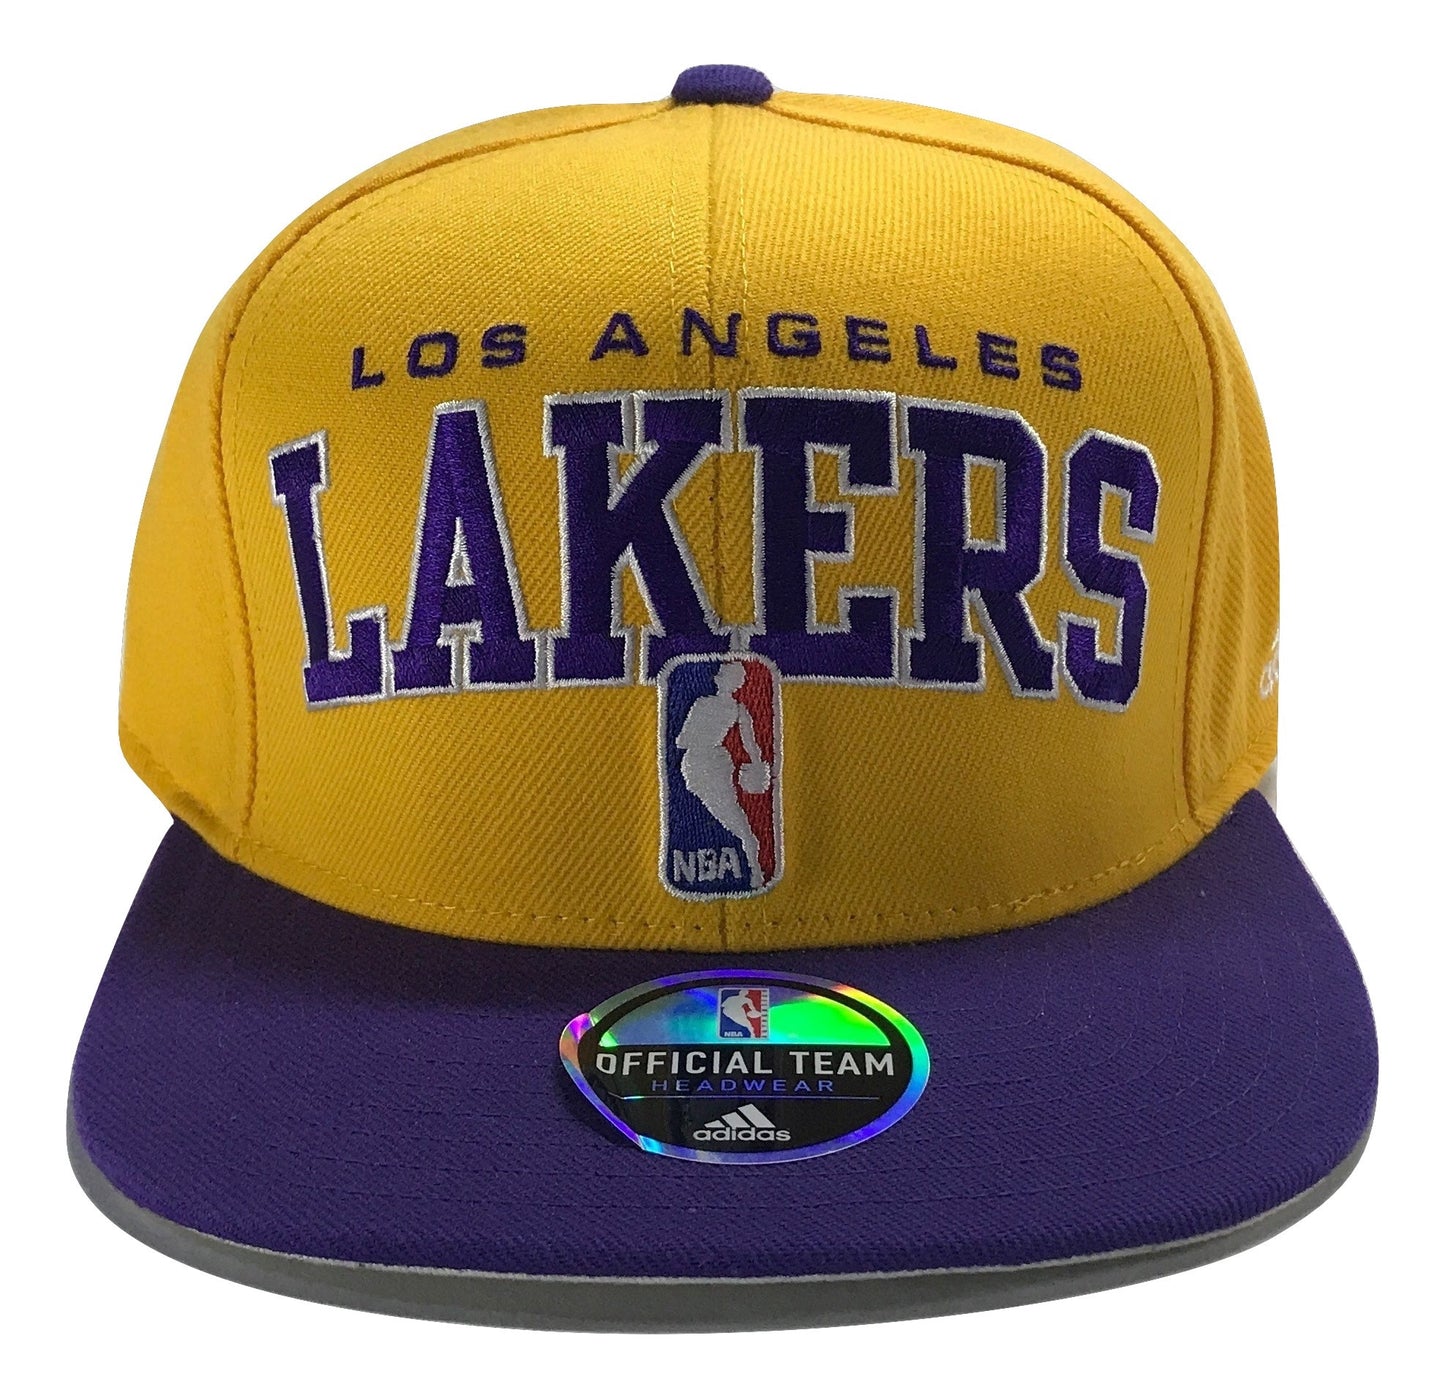 Los Angeles Lakers (Yellow) Snpback